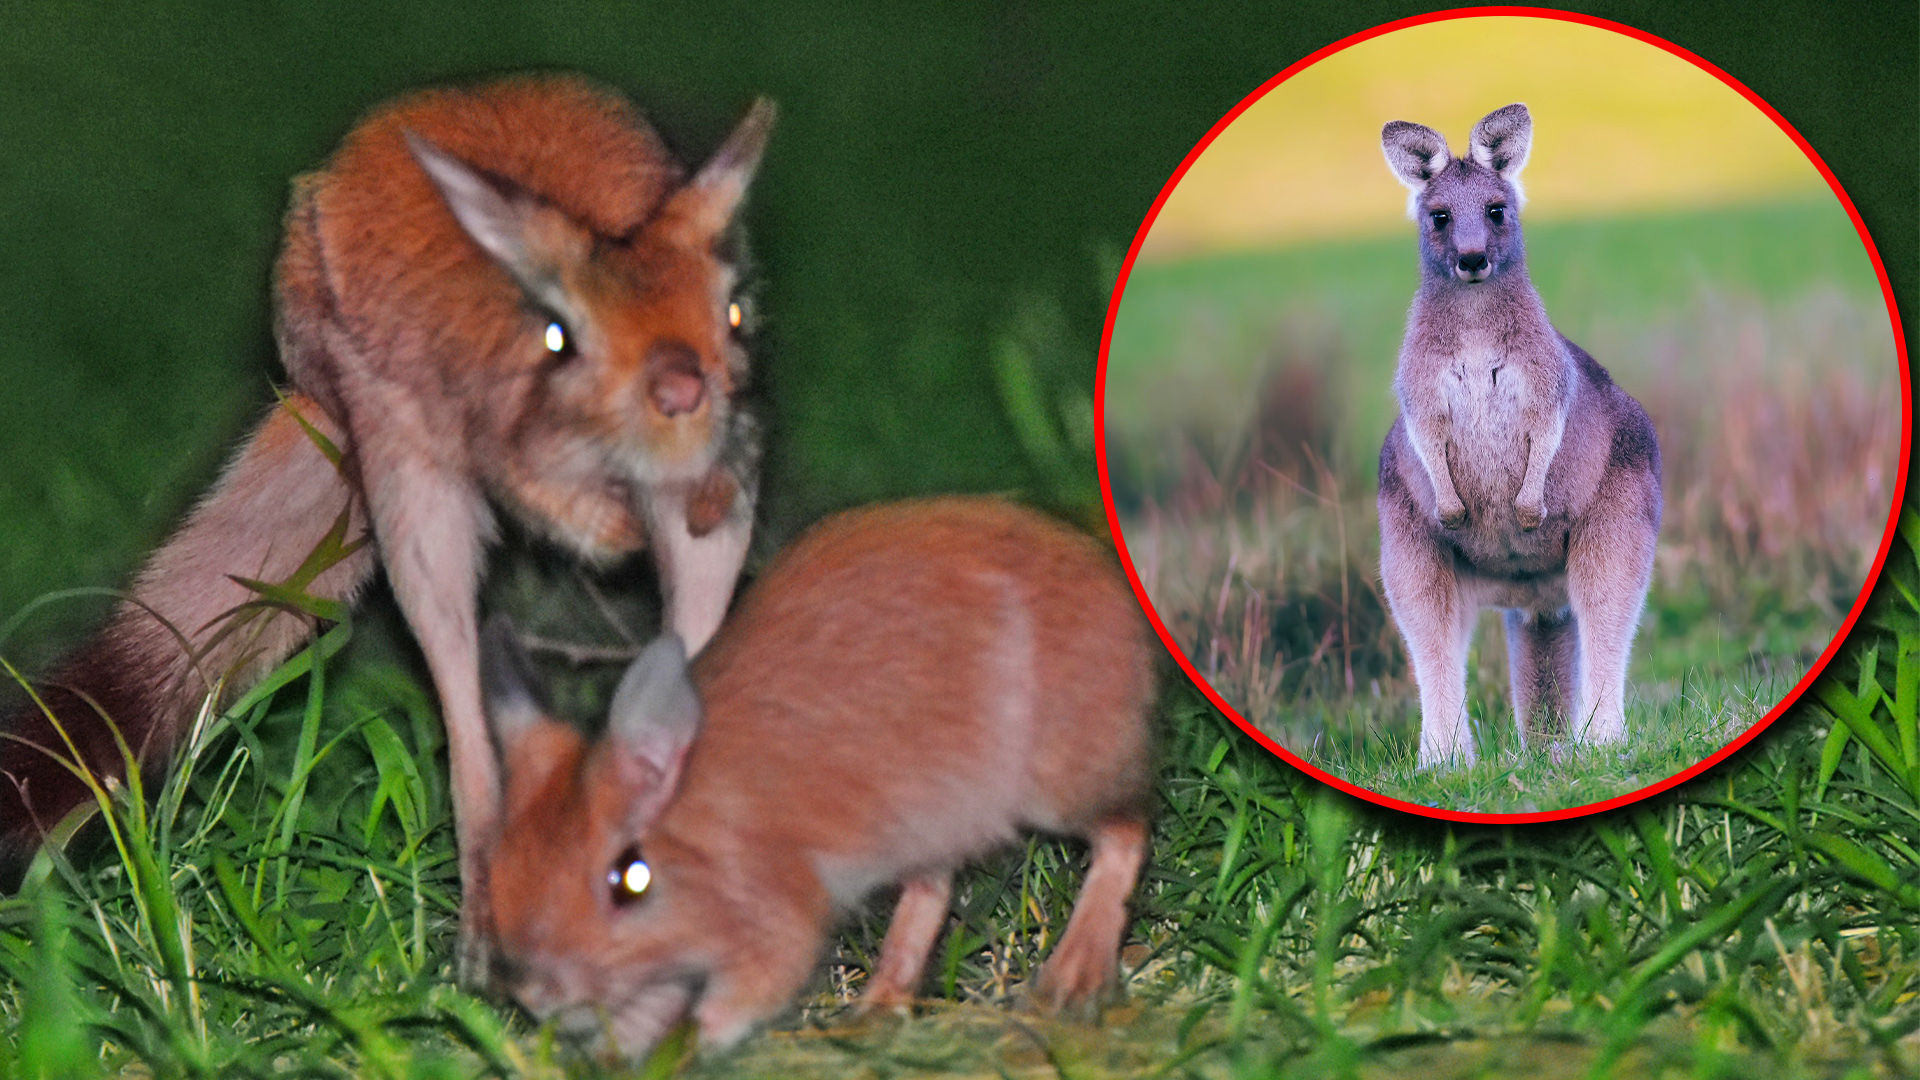 Meet Africa’s Kangaroo – the Spring Hare